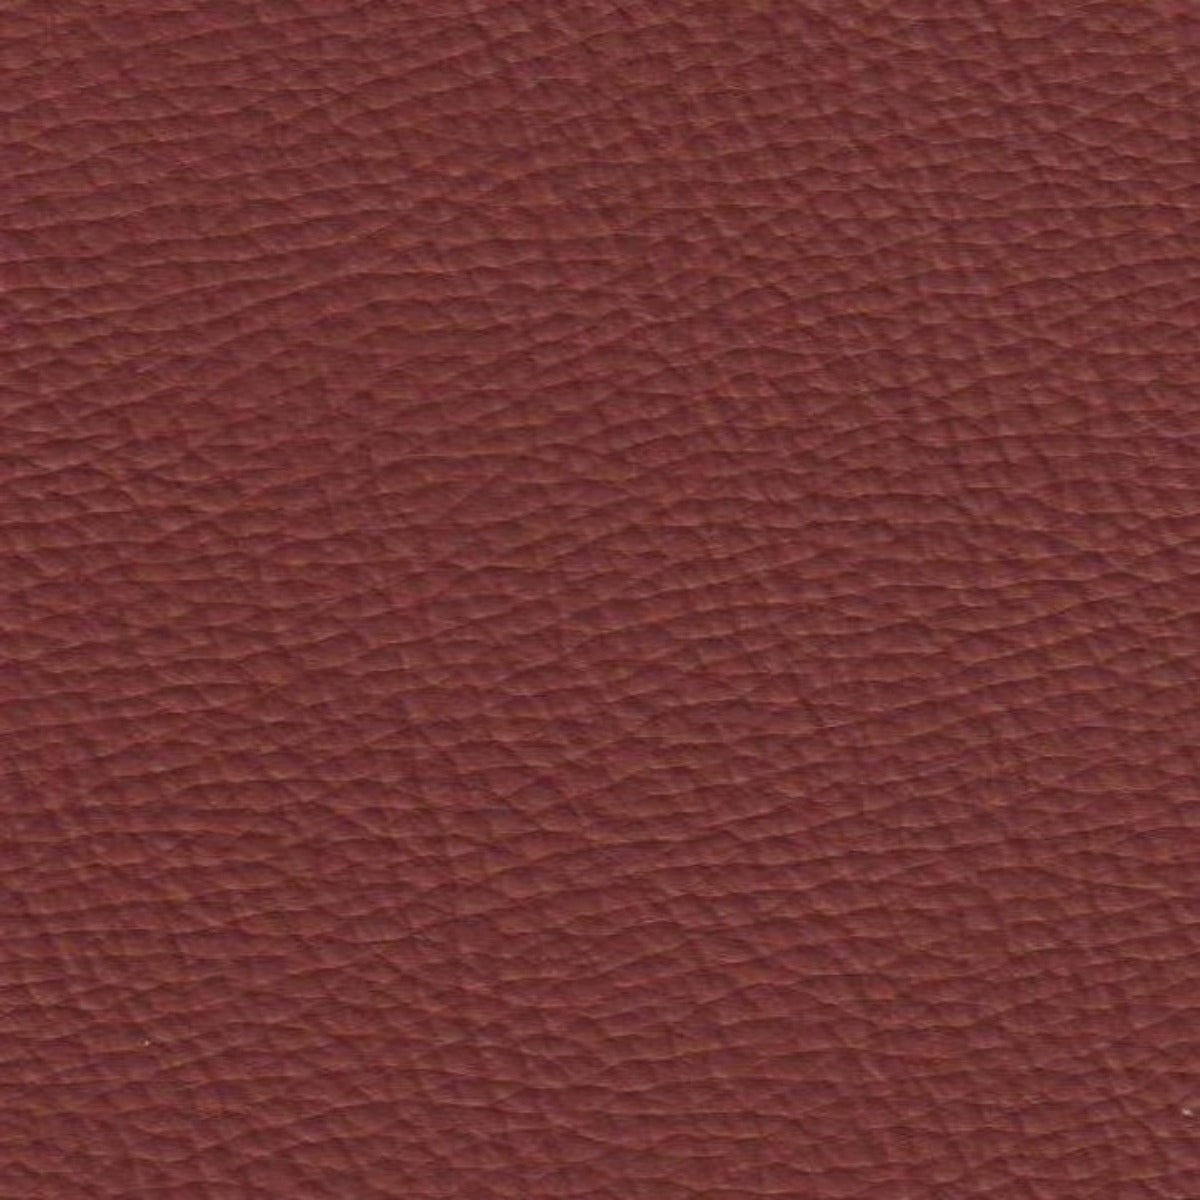 Burgundy Textured PVC Leather Vinyl Fabric - Fashion Fabrics Los Angeles 